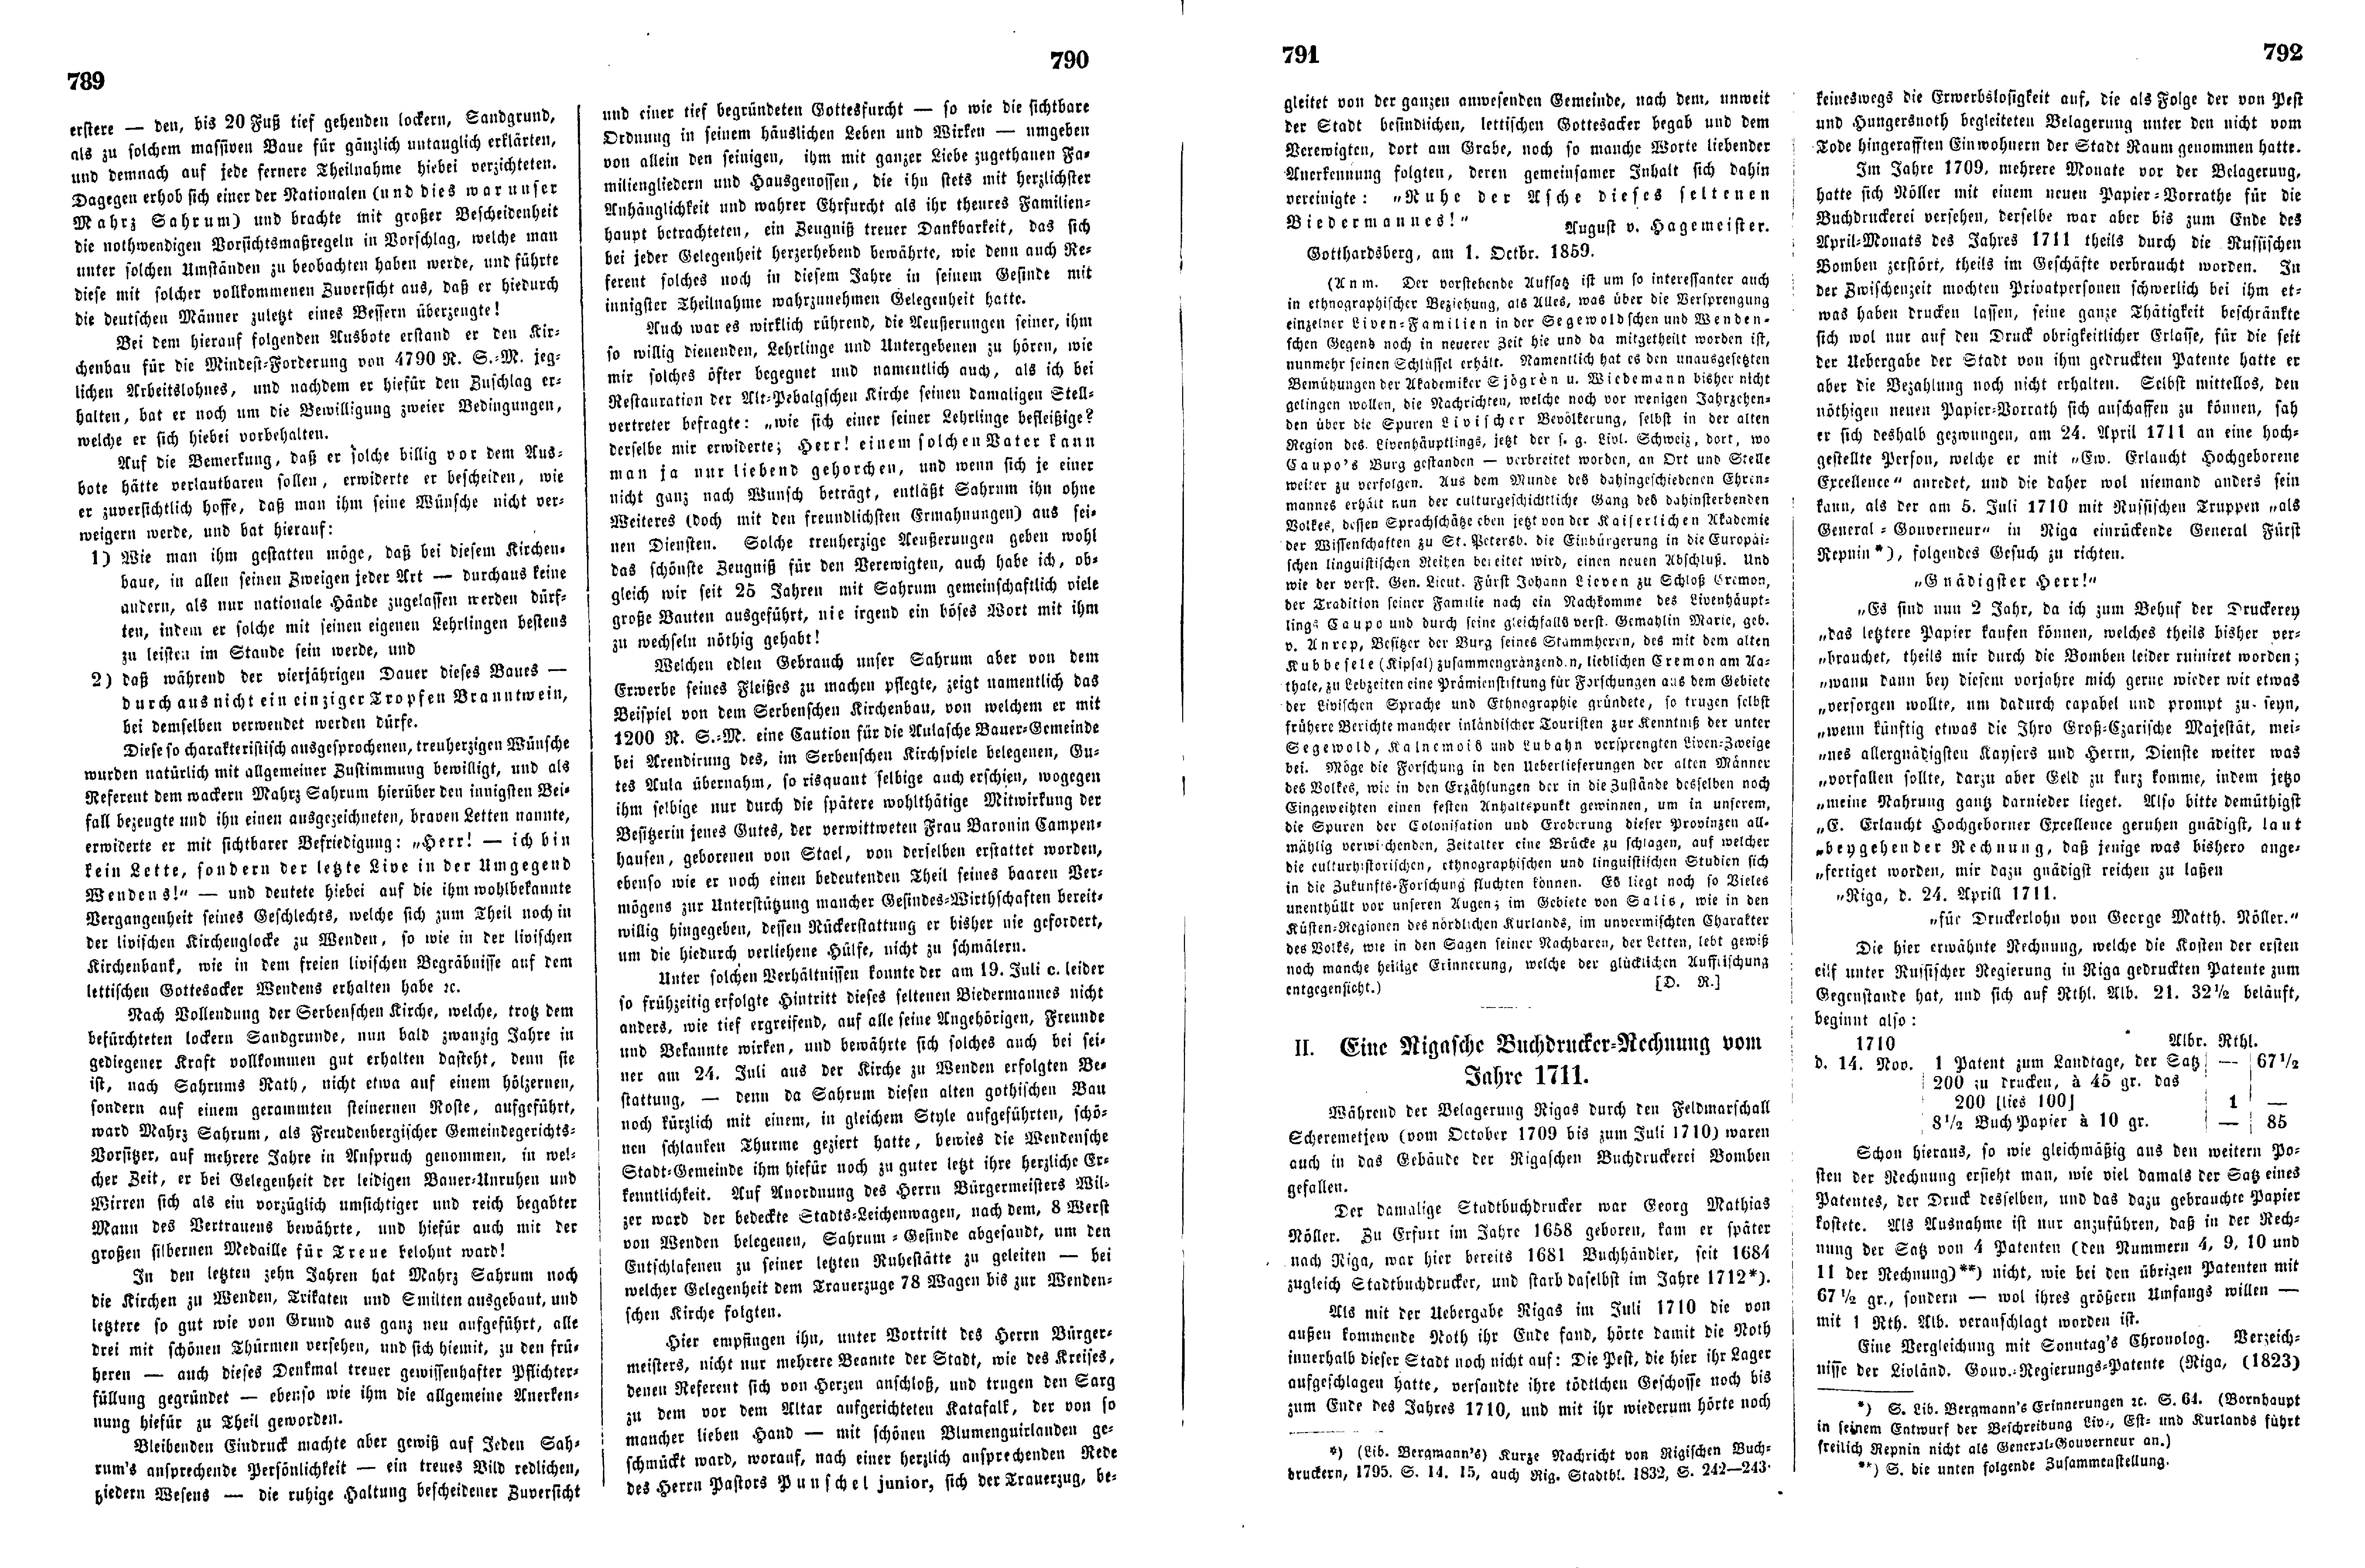 Mahrs Sahrum, der letzte Live in der Umgegend Wenden's (1859) | 2. (789-792) Основной текст